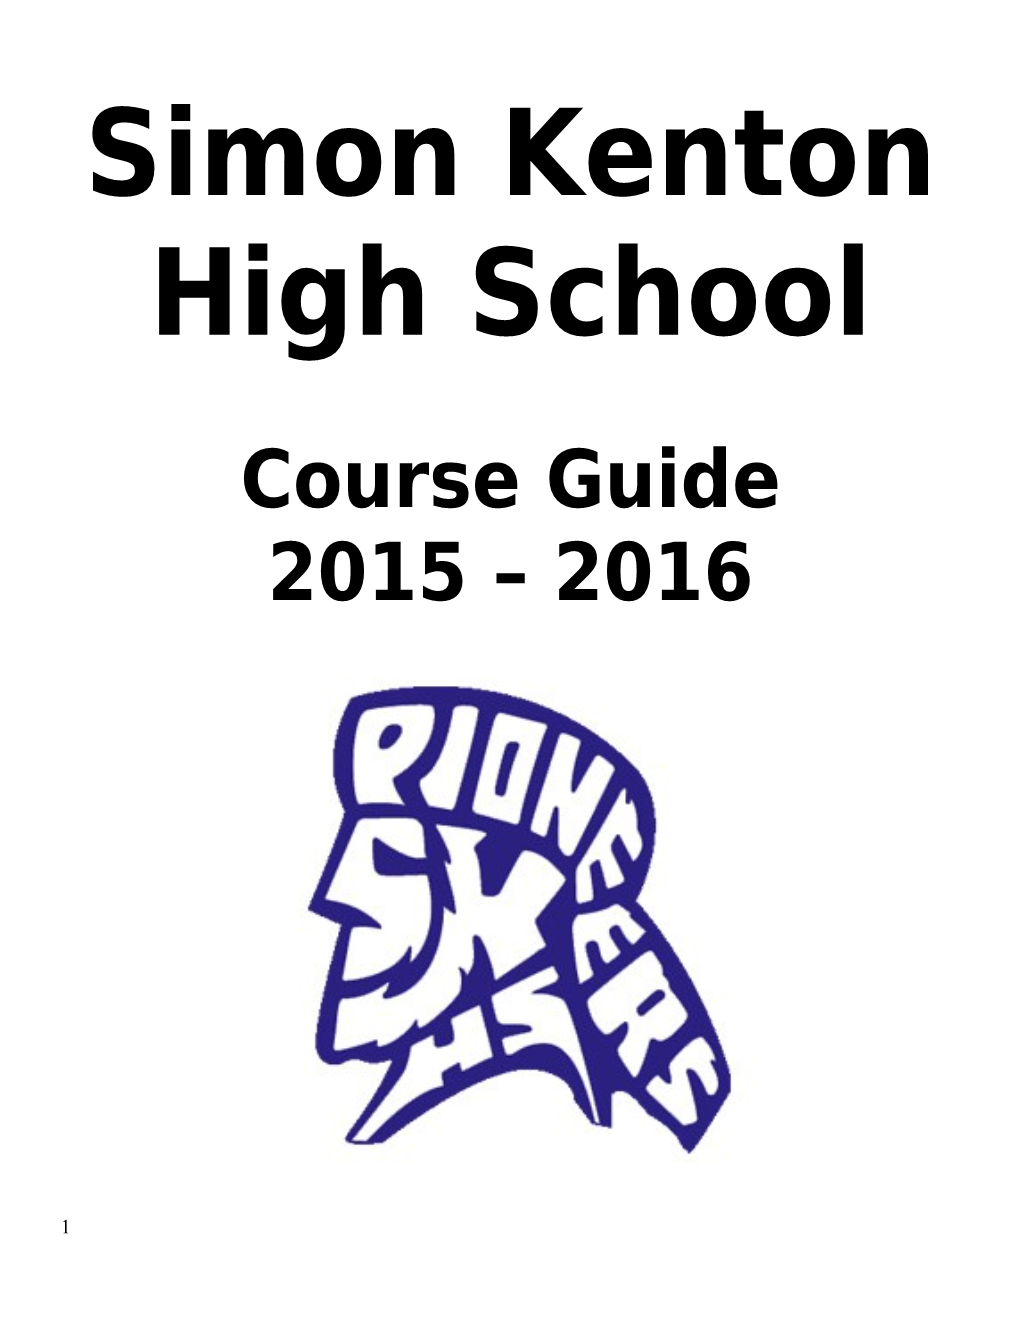 Simon Kenton High School